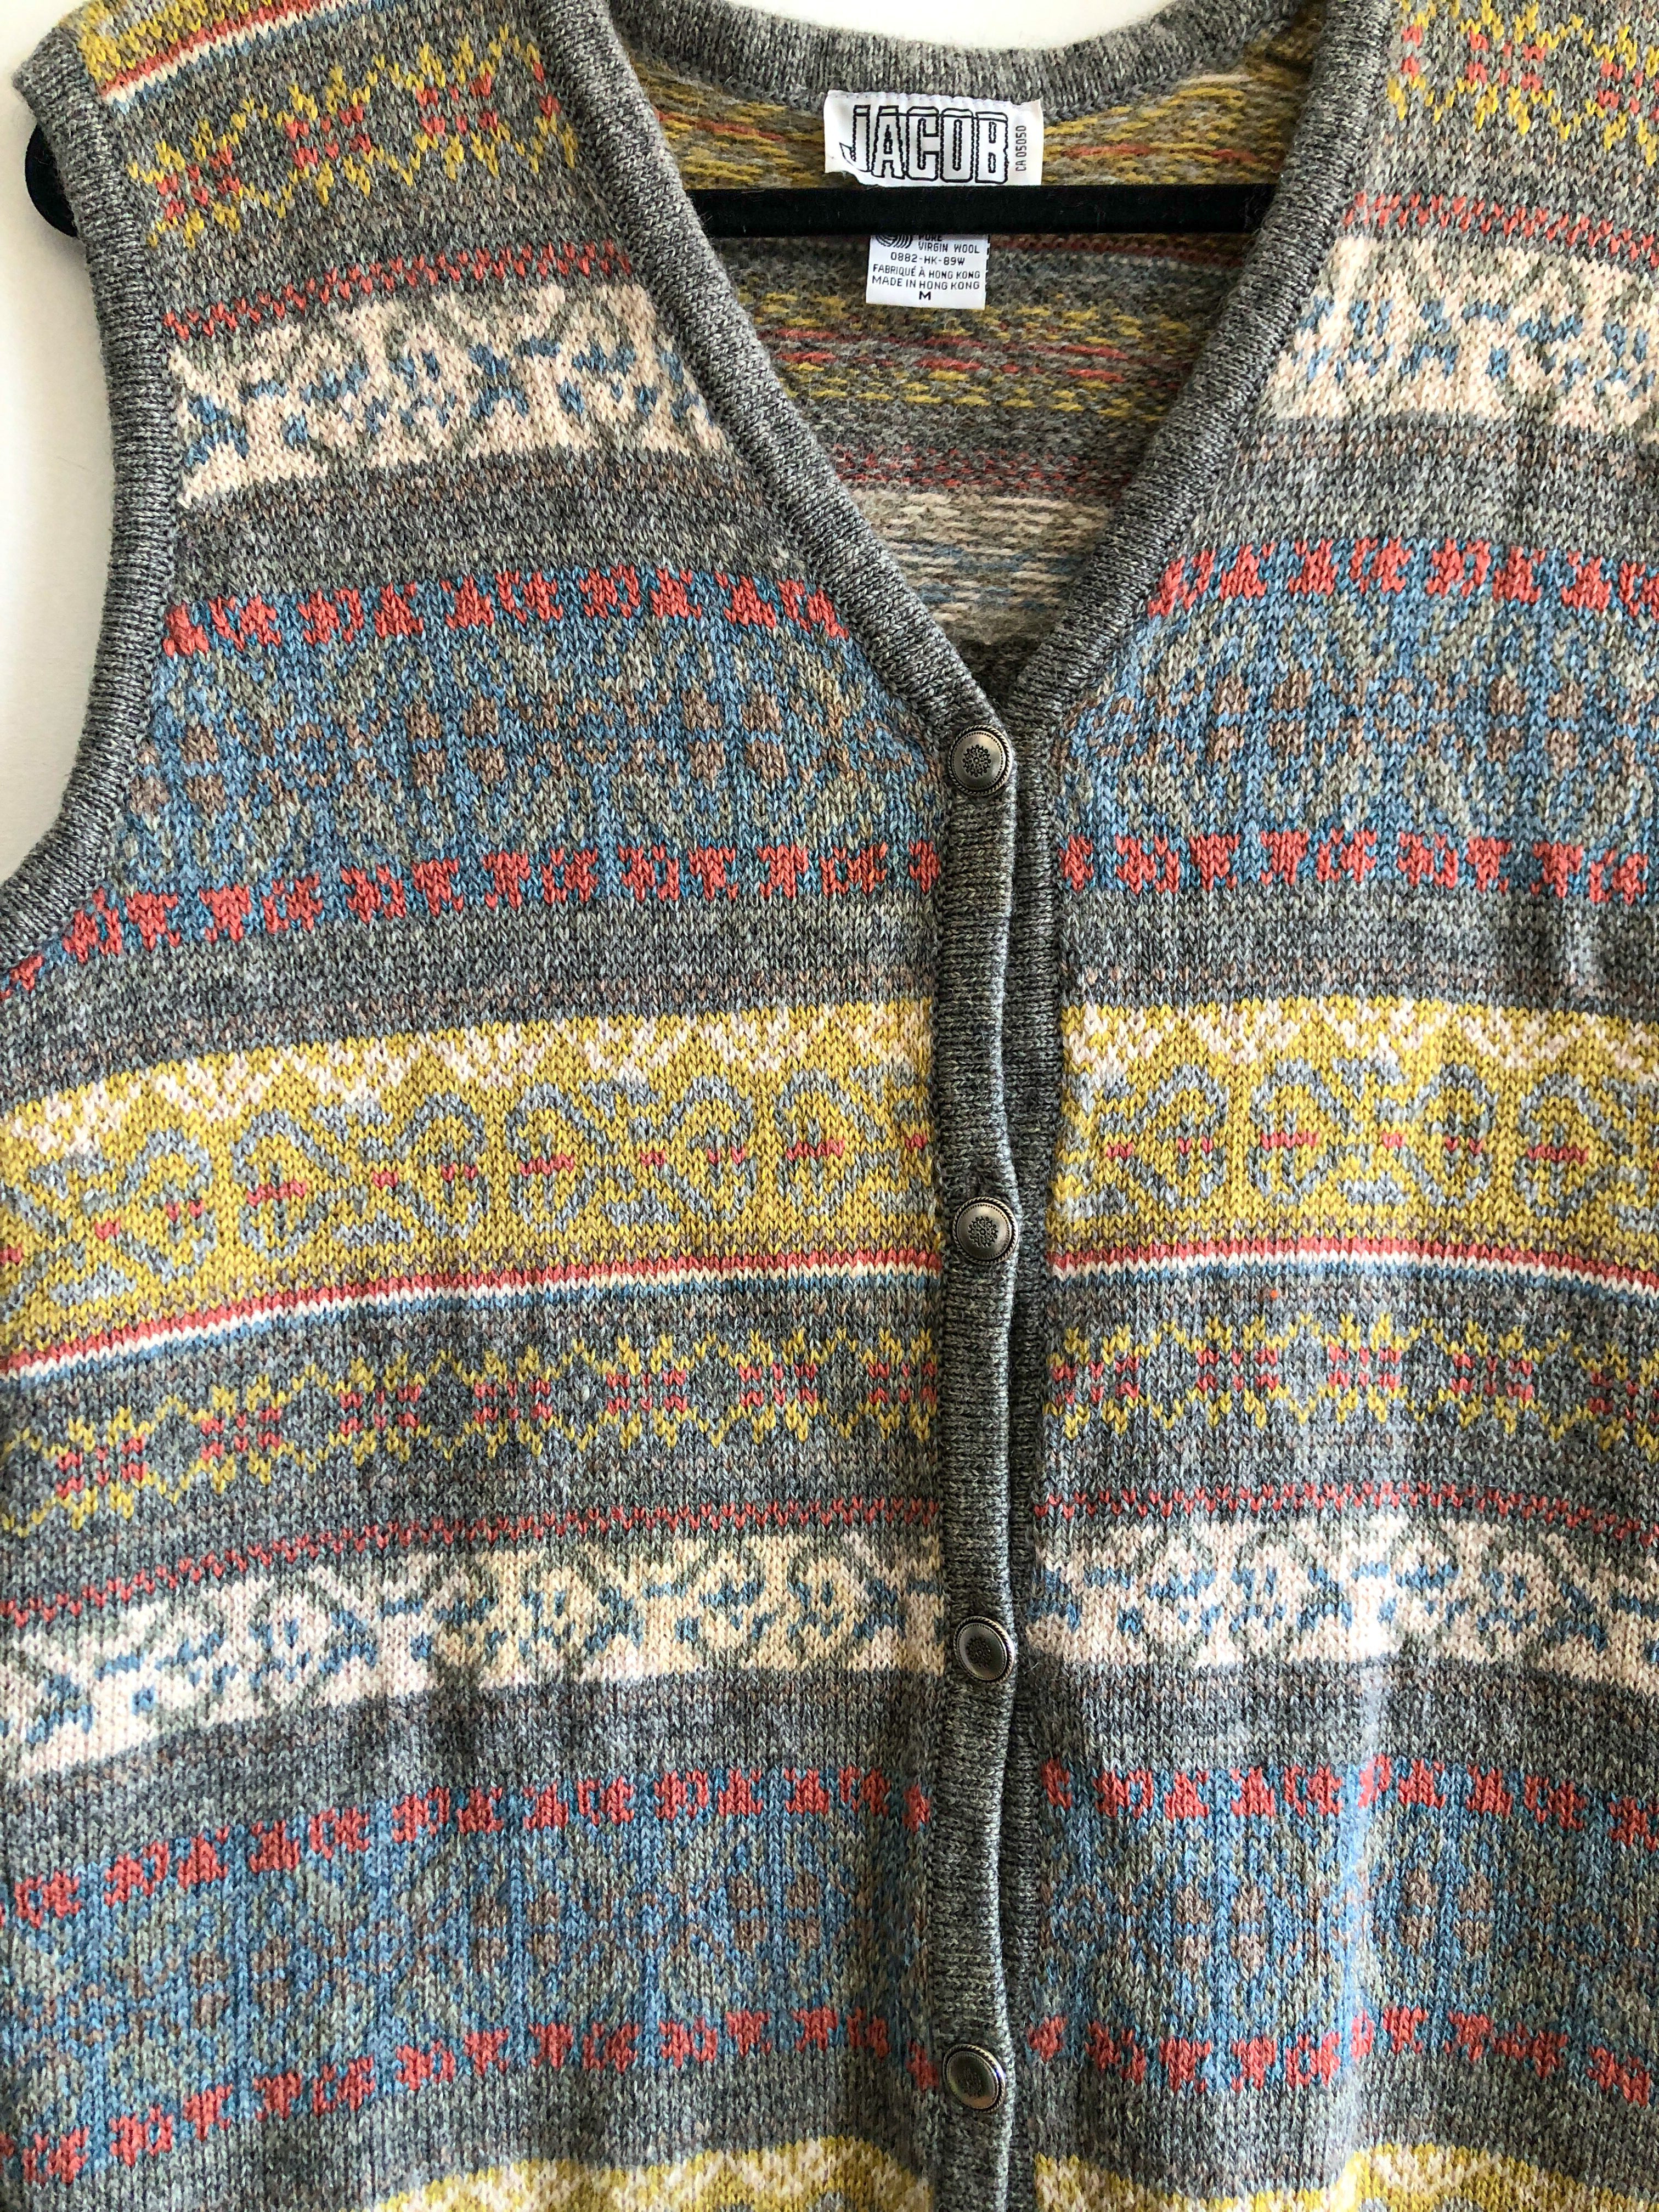 90s Jacob Wool Sweater Vest, Boxy Fit Oversized Grandpa Sweater, Woven Graphic Striped Sweater